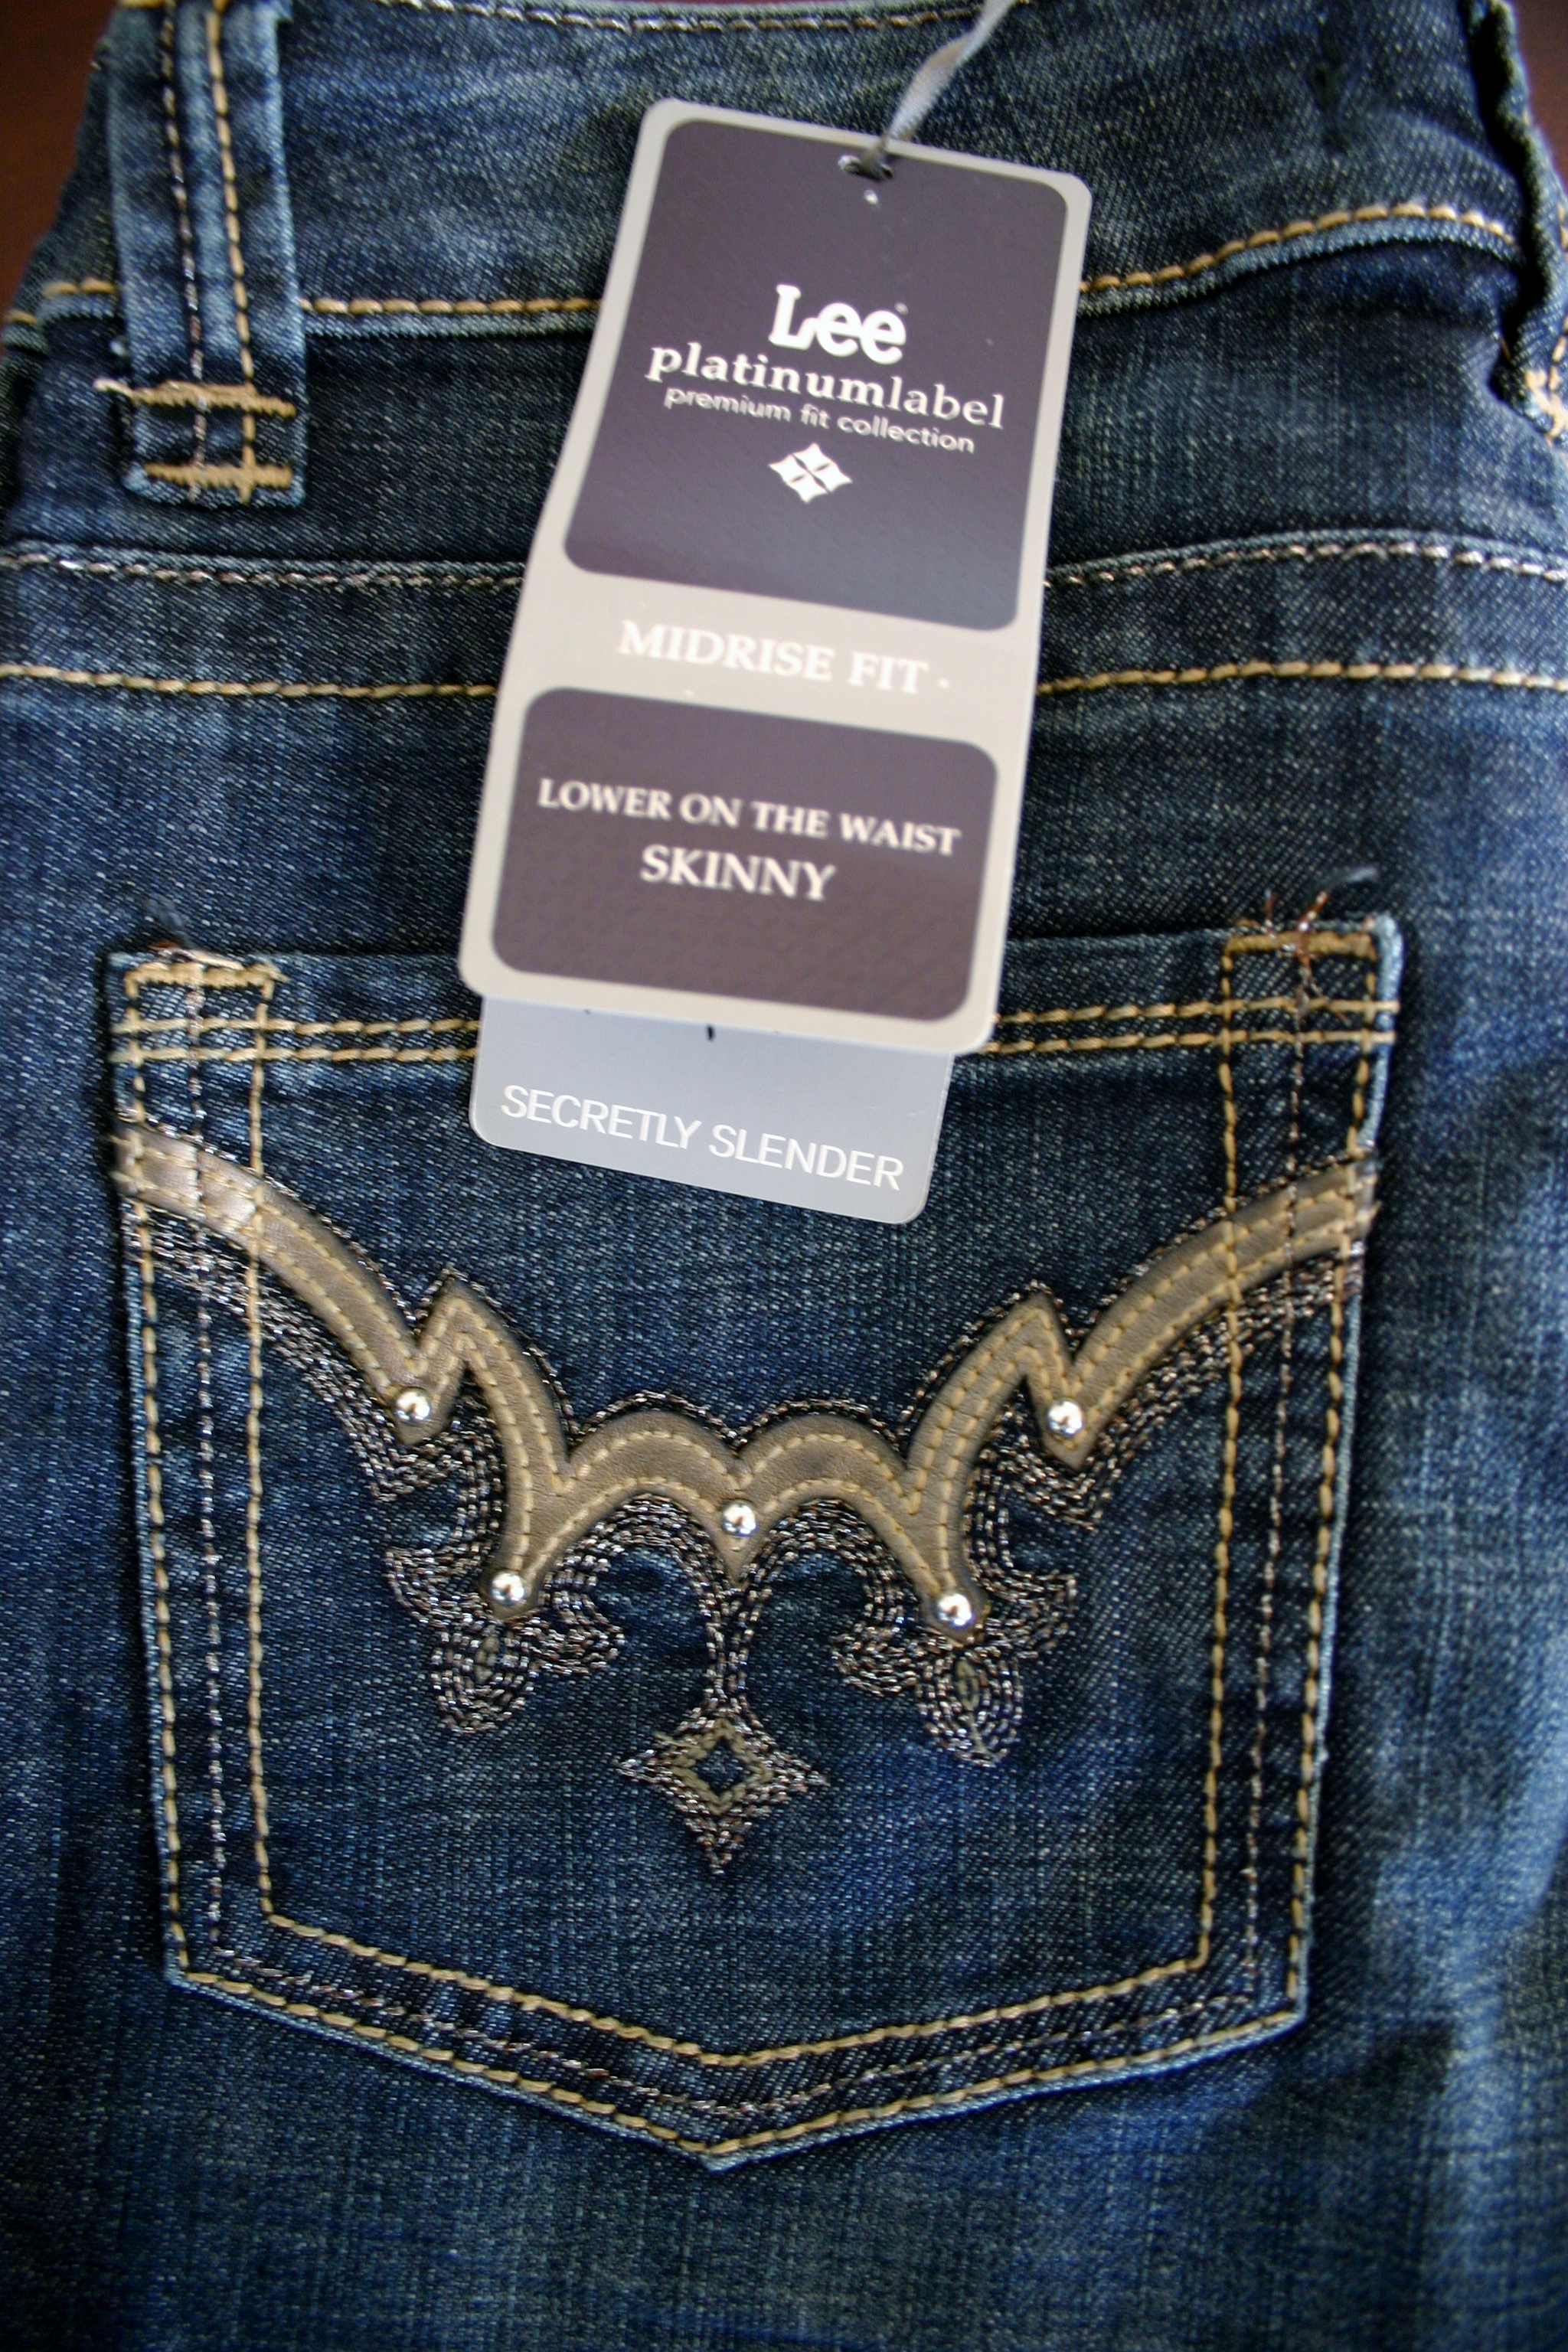 lee platinum label skinny jeans